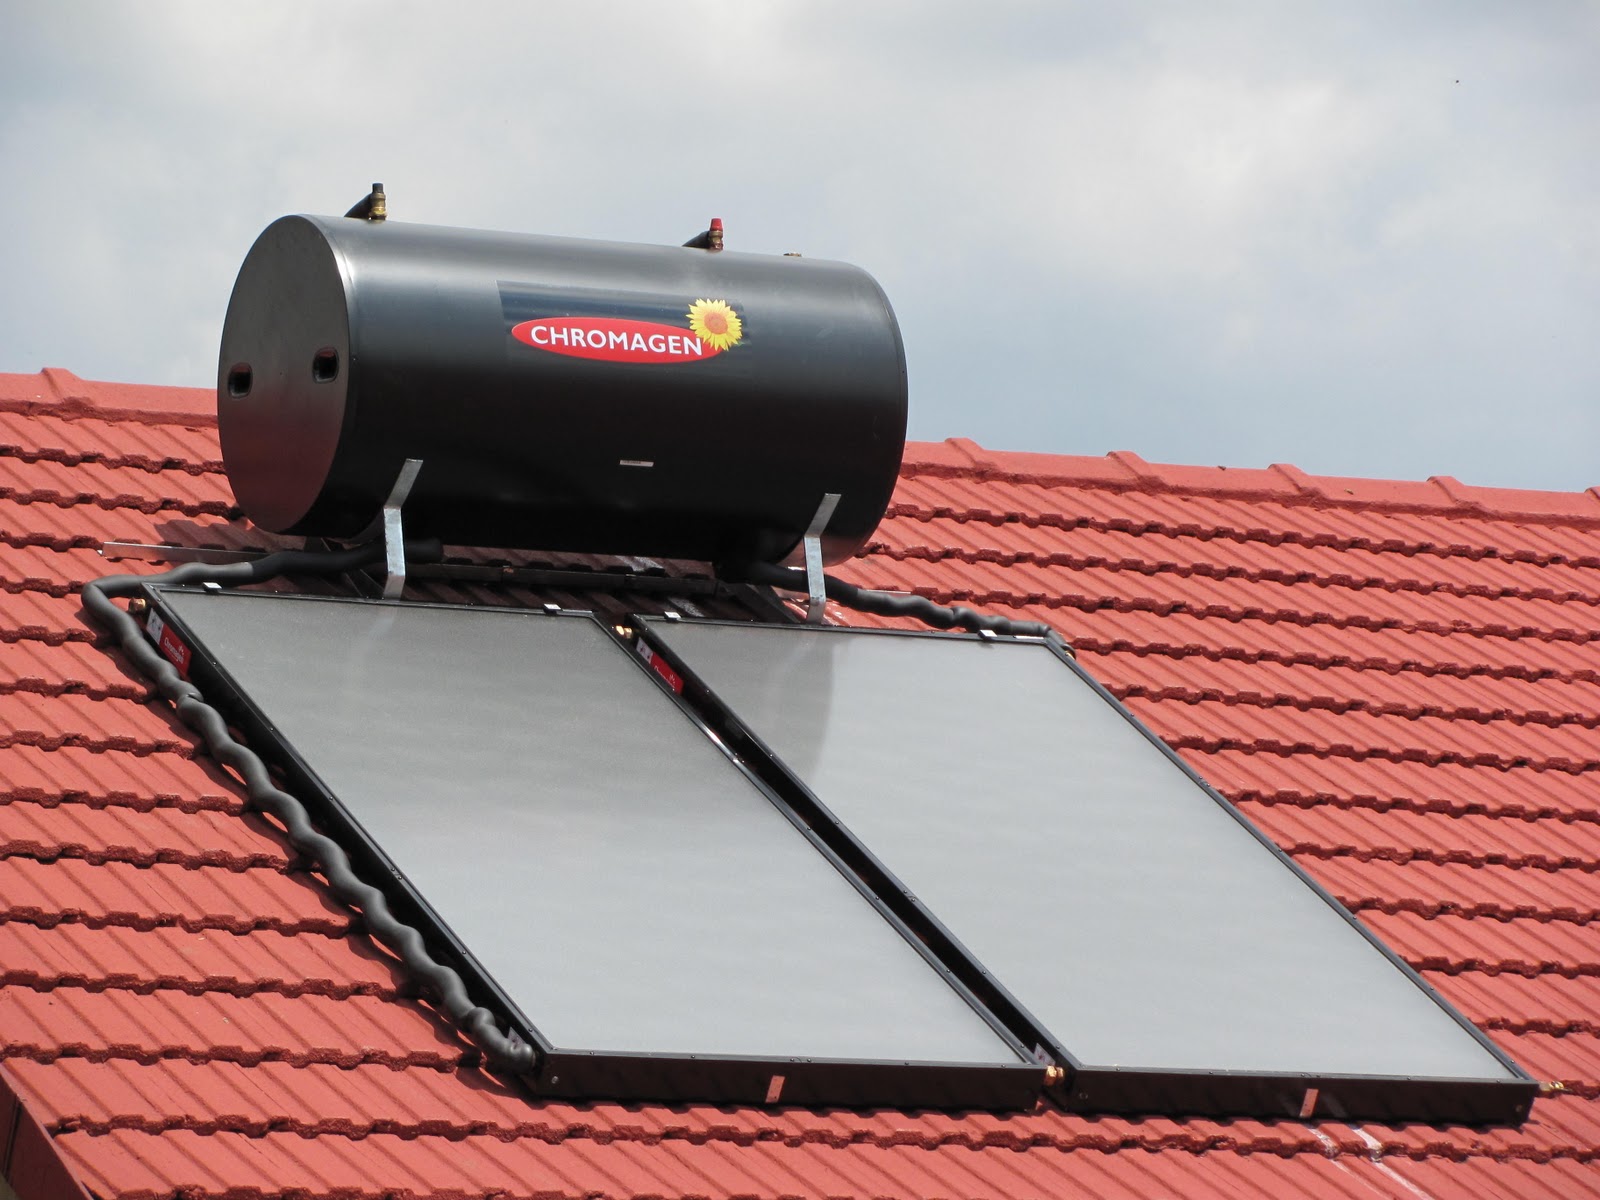 Pv Solar Panels For Home Lighting Best Solar Geyser South Africa 